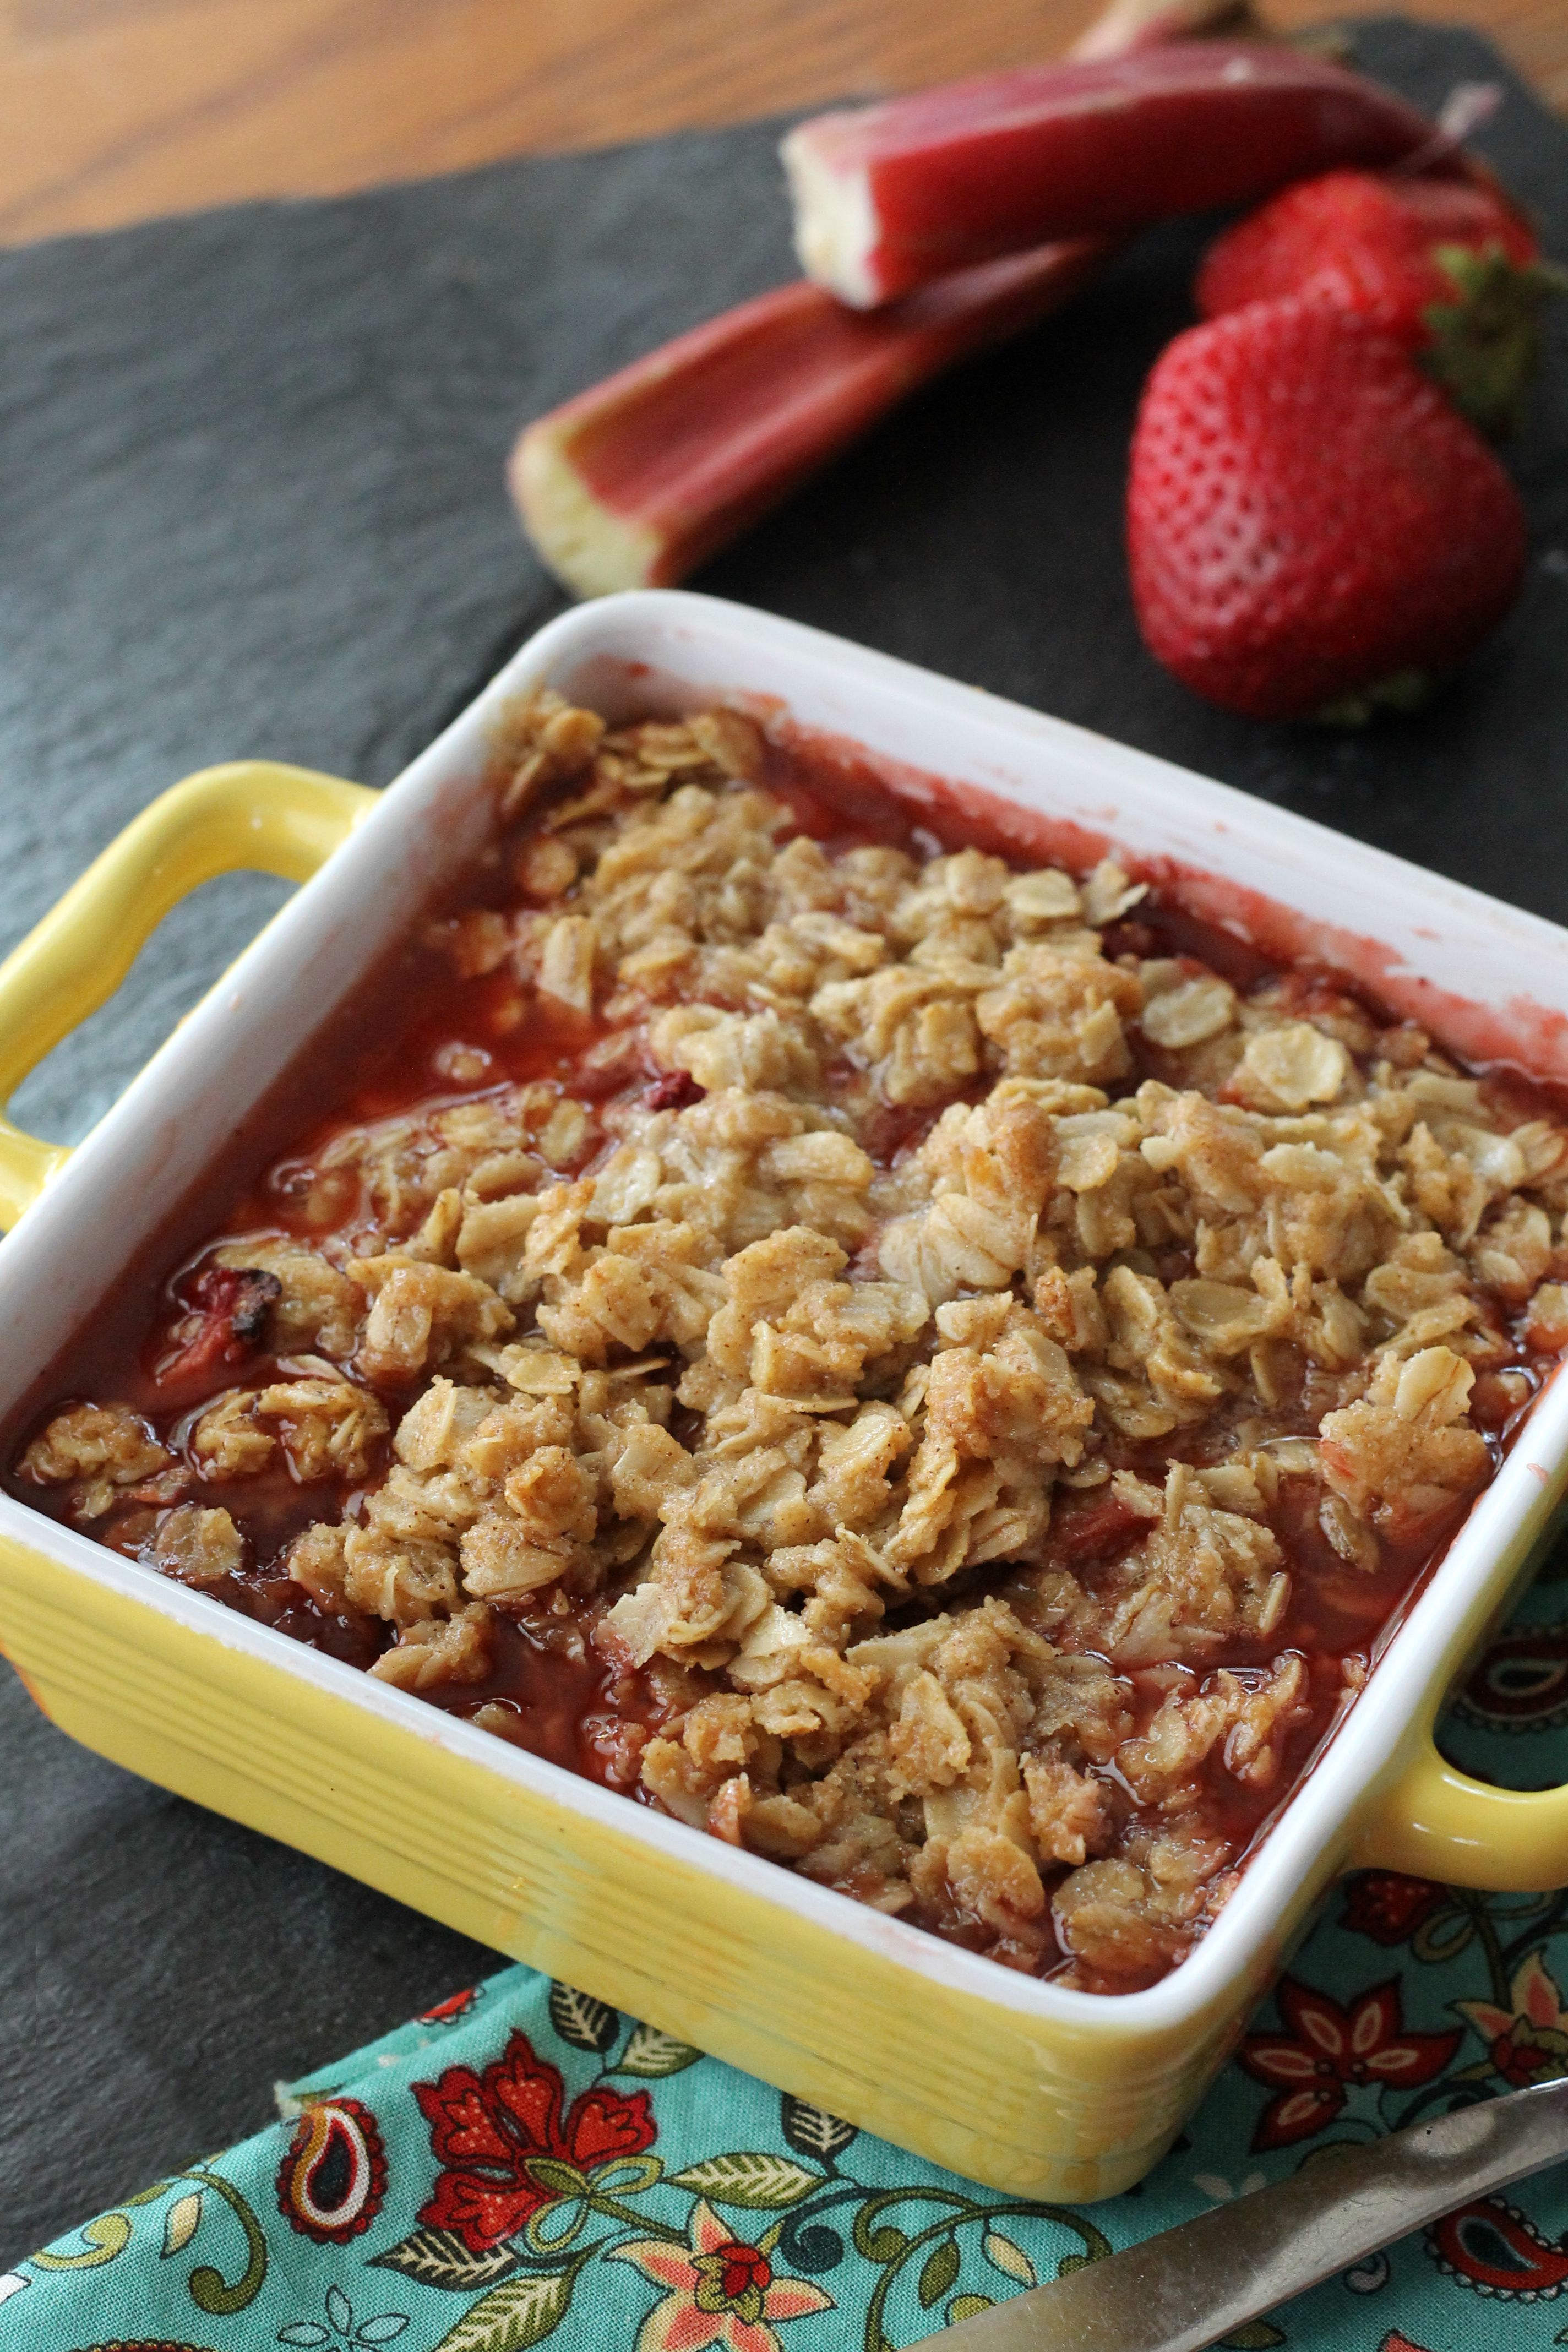 Strawberry Rhubarb Crumble Recipe - Not Quite Susie Homemaker